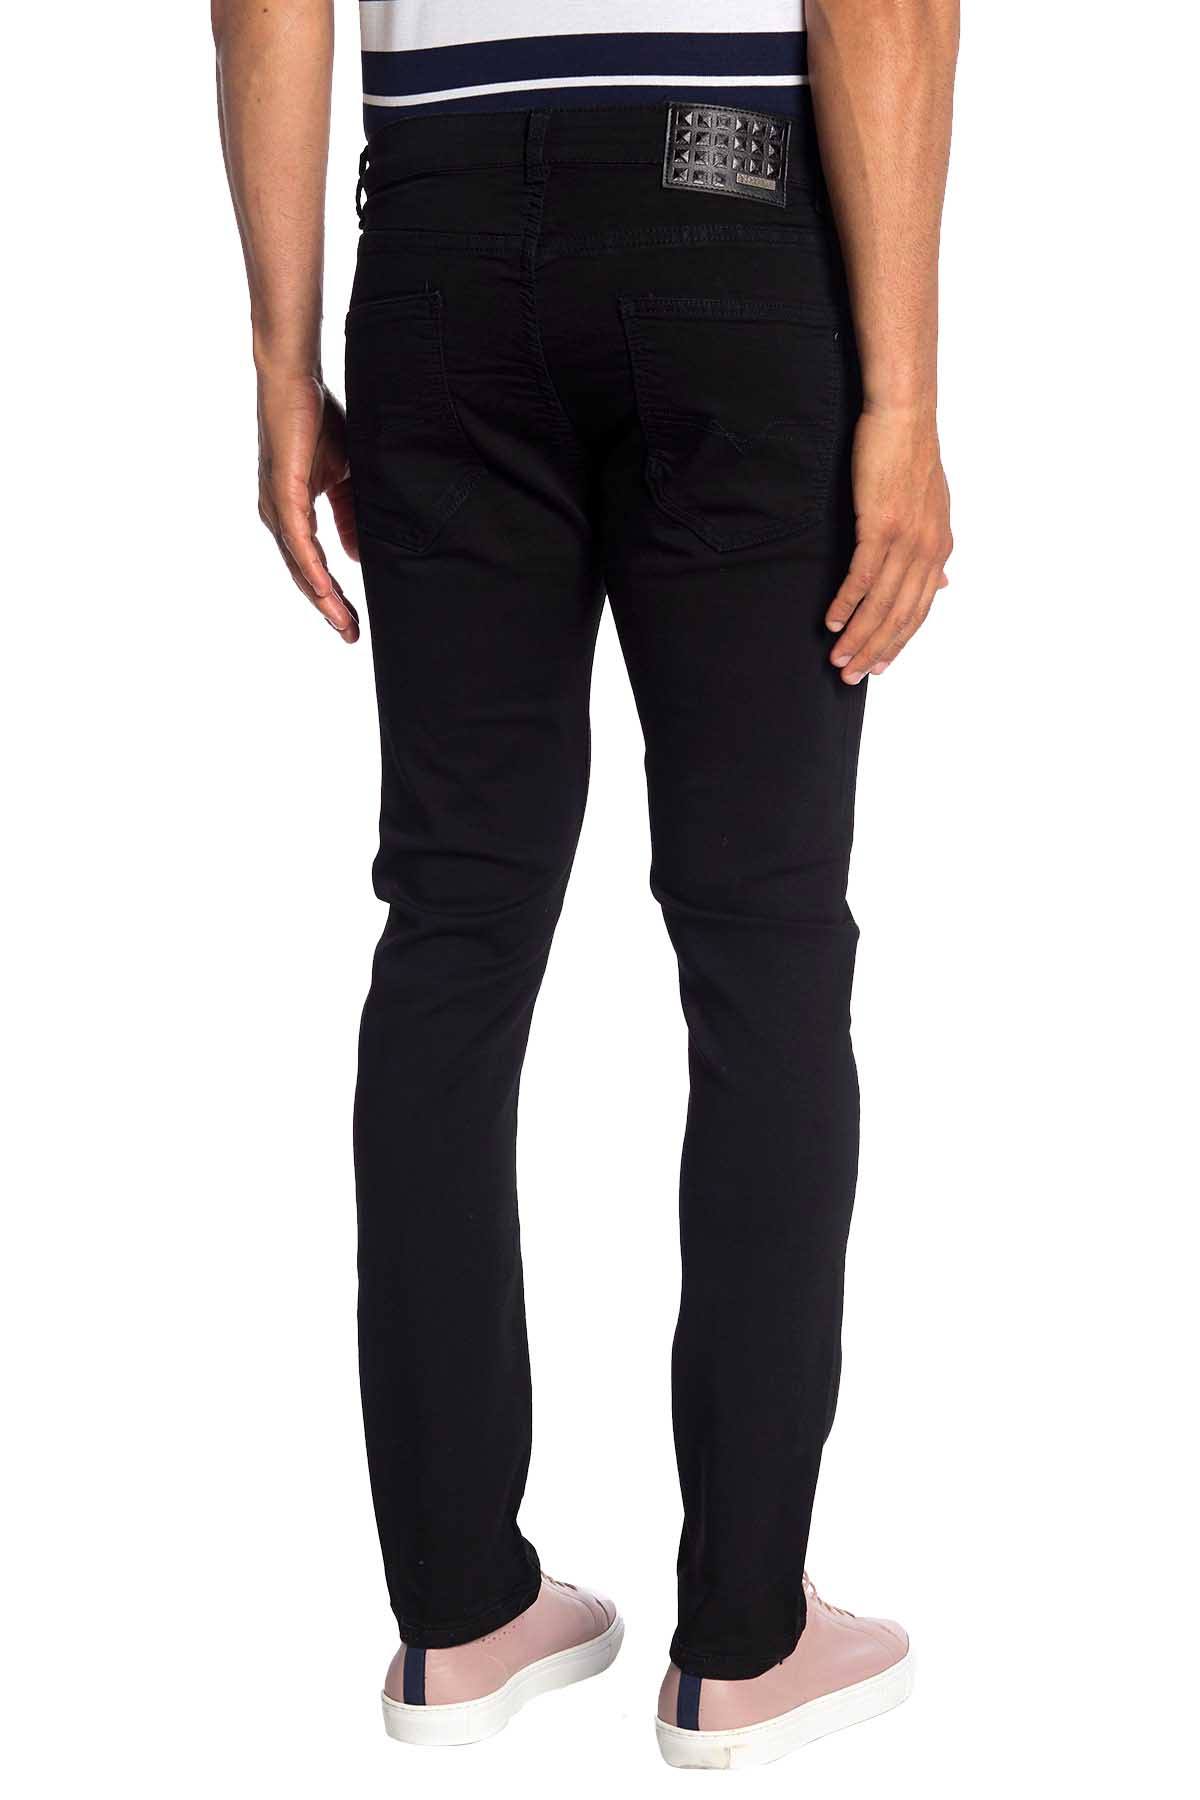 Recess Jeans Black Solid Stretch Slim Jean